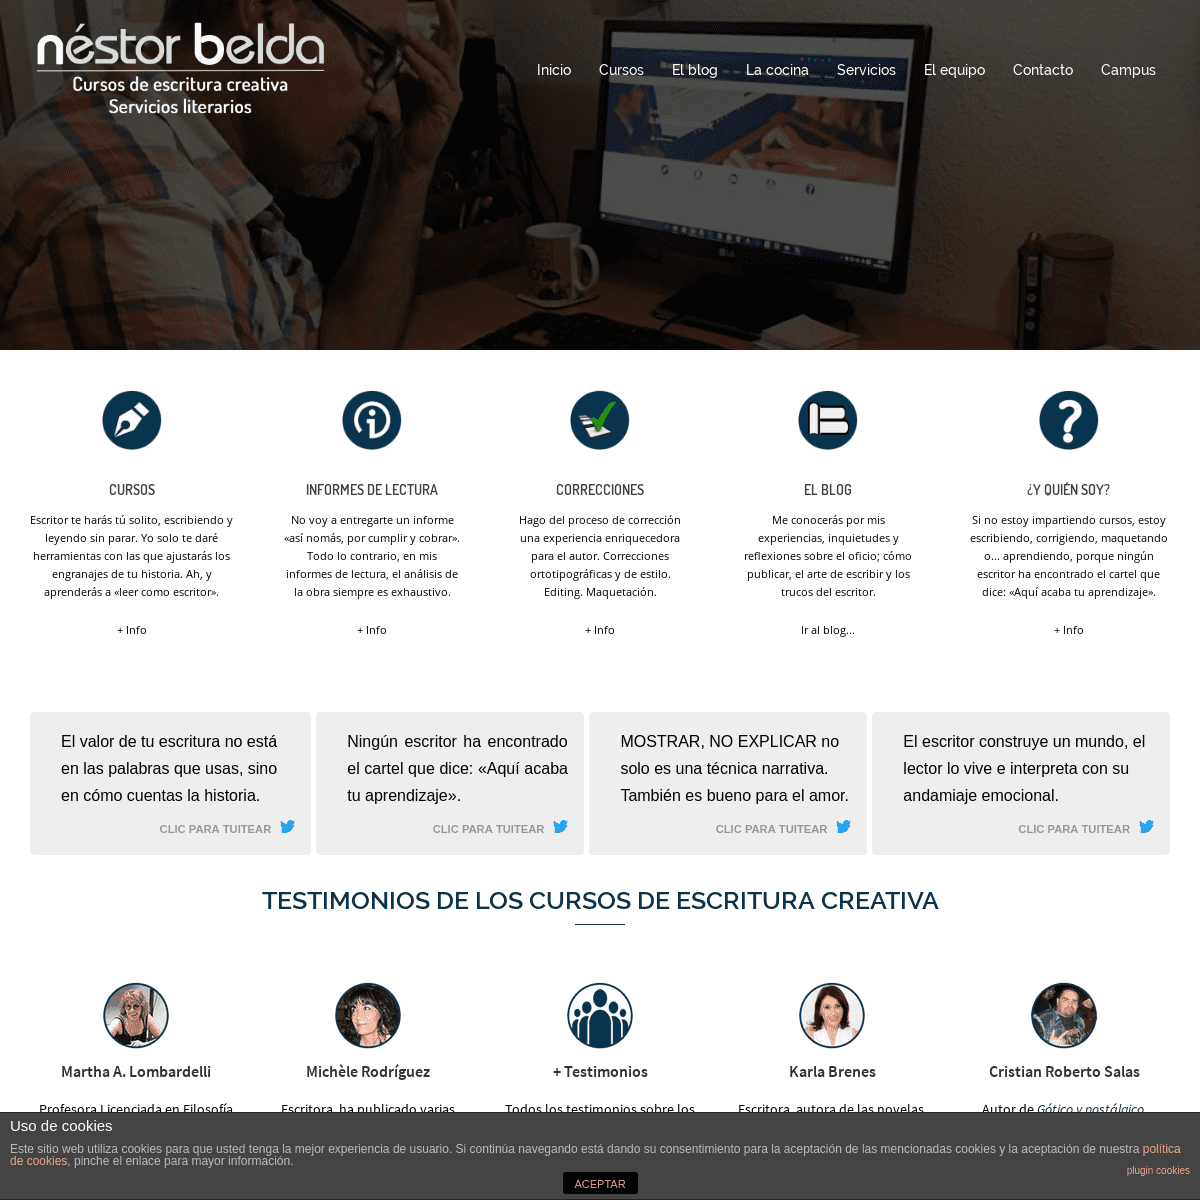 A complete backup of nestorbelda.com